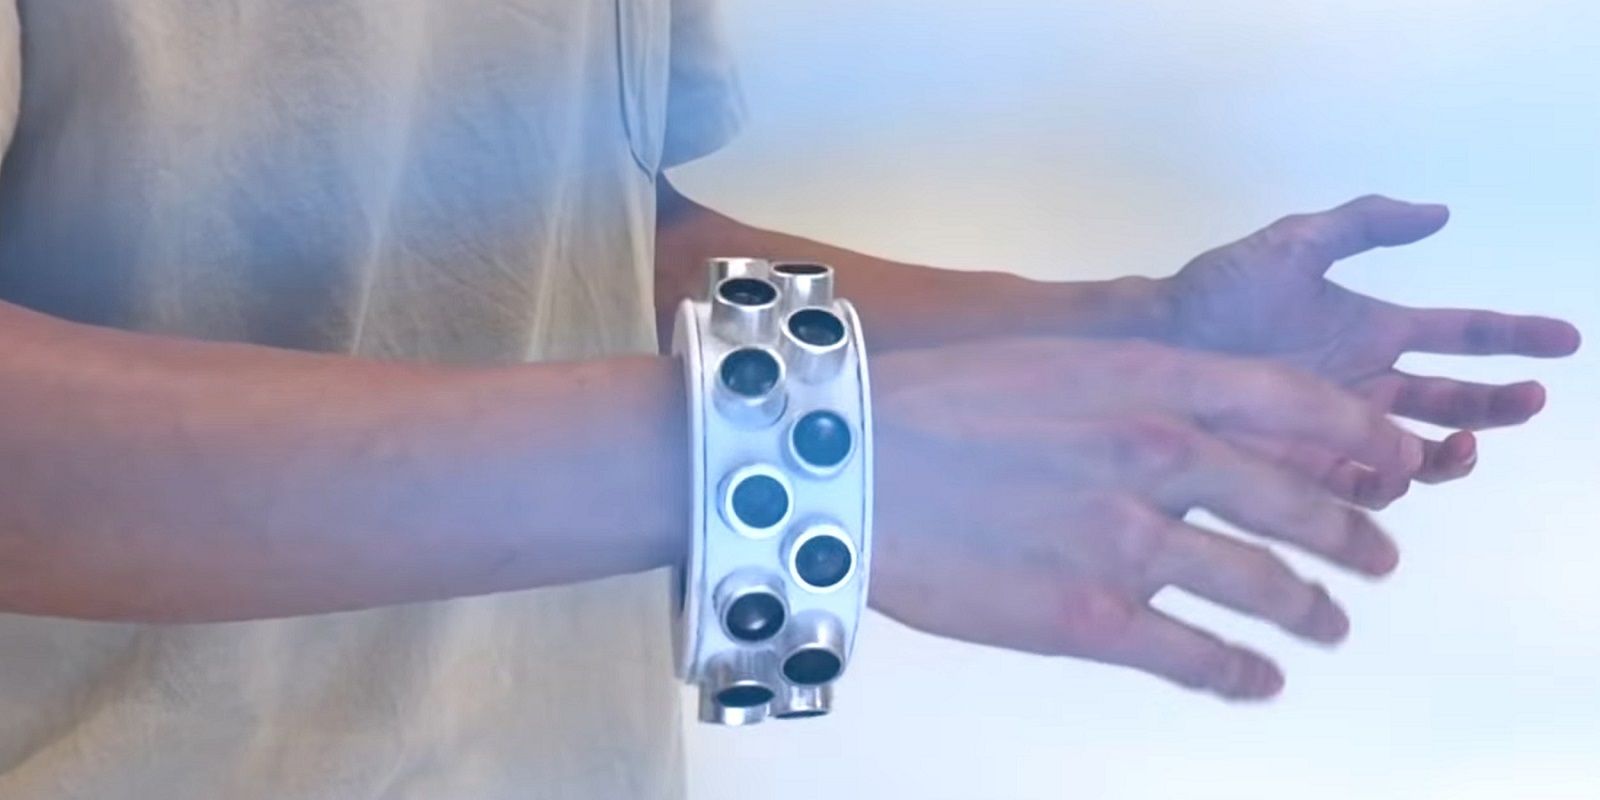 Anti-Alexa bracelet worn